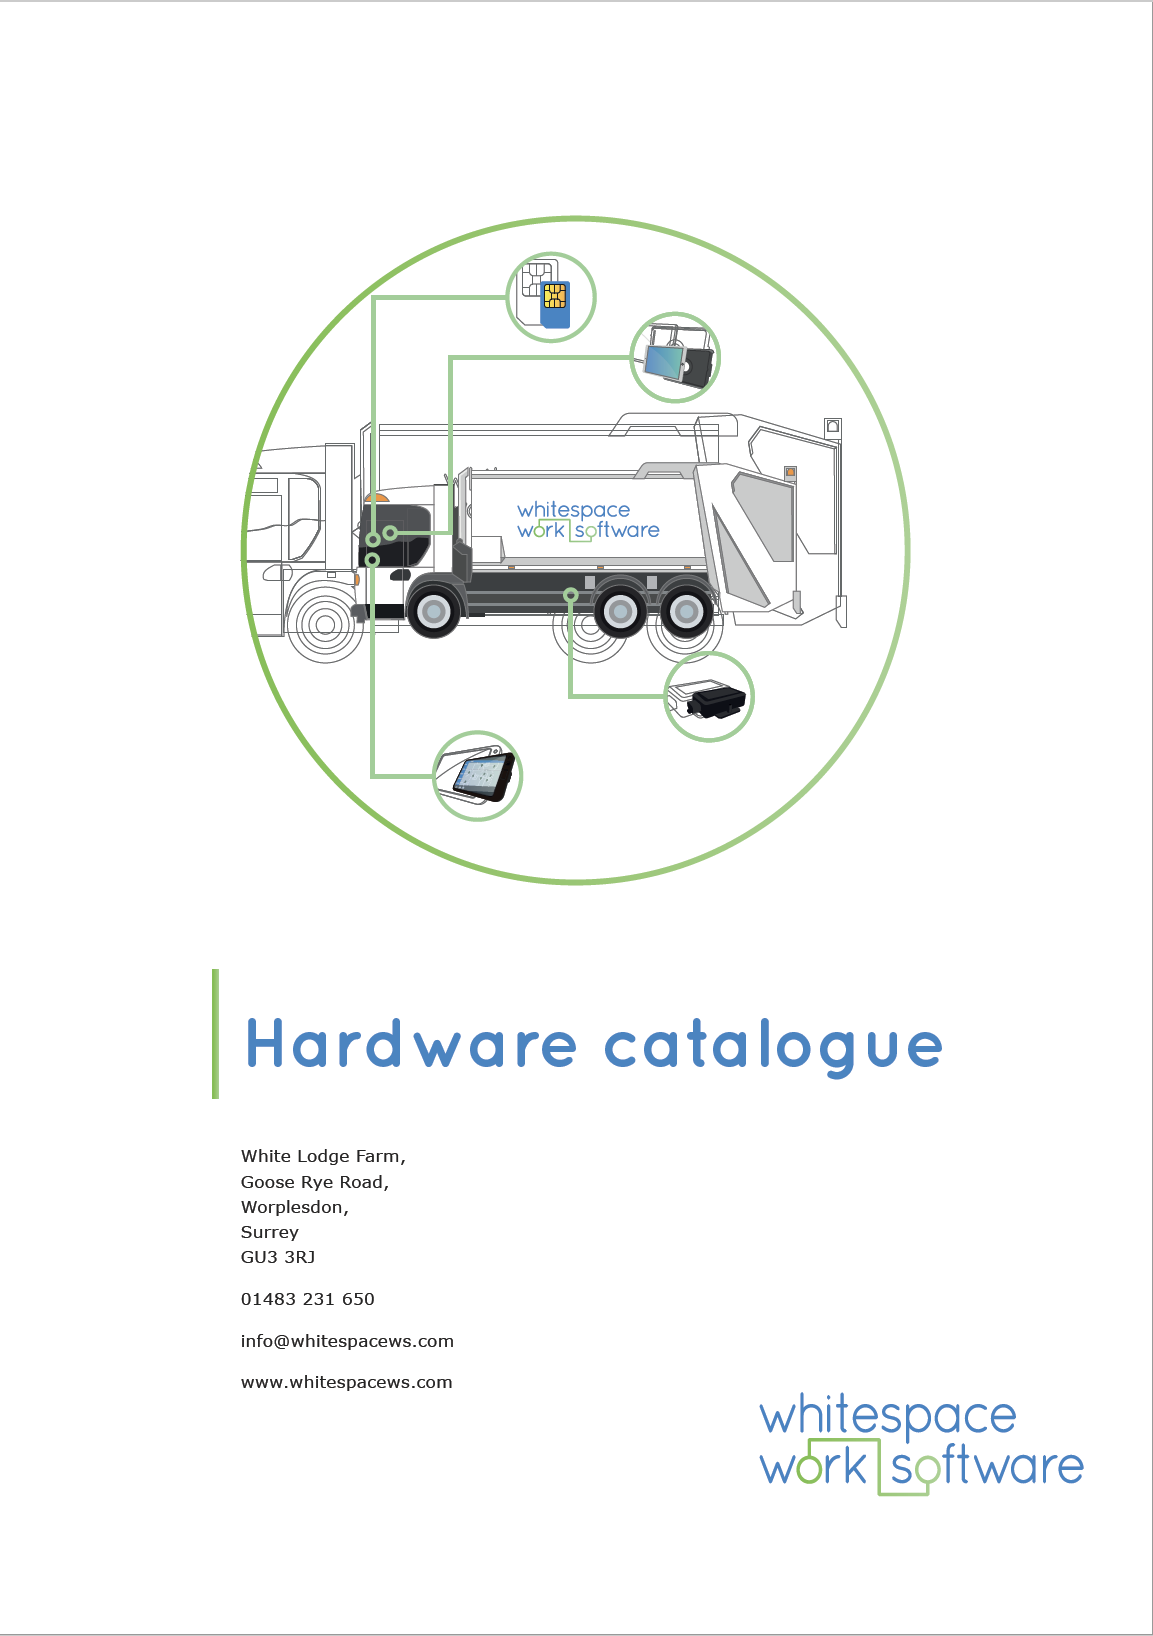 Hardware Catalogue